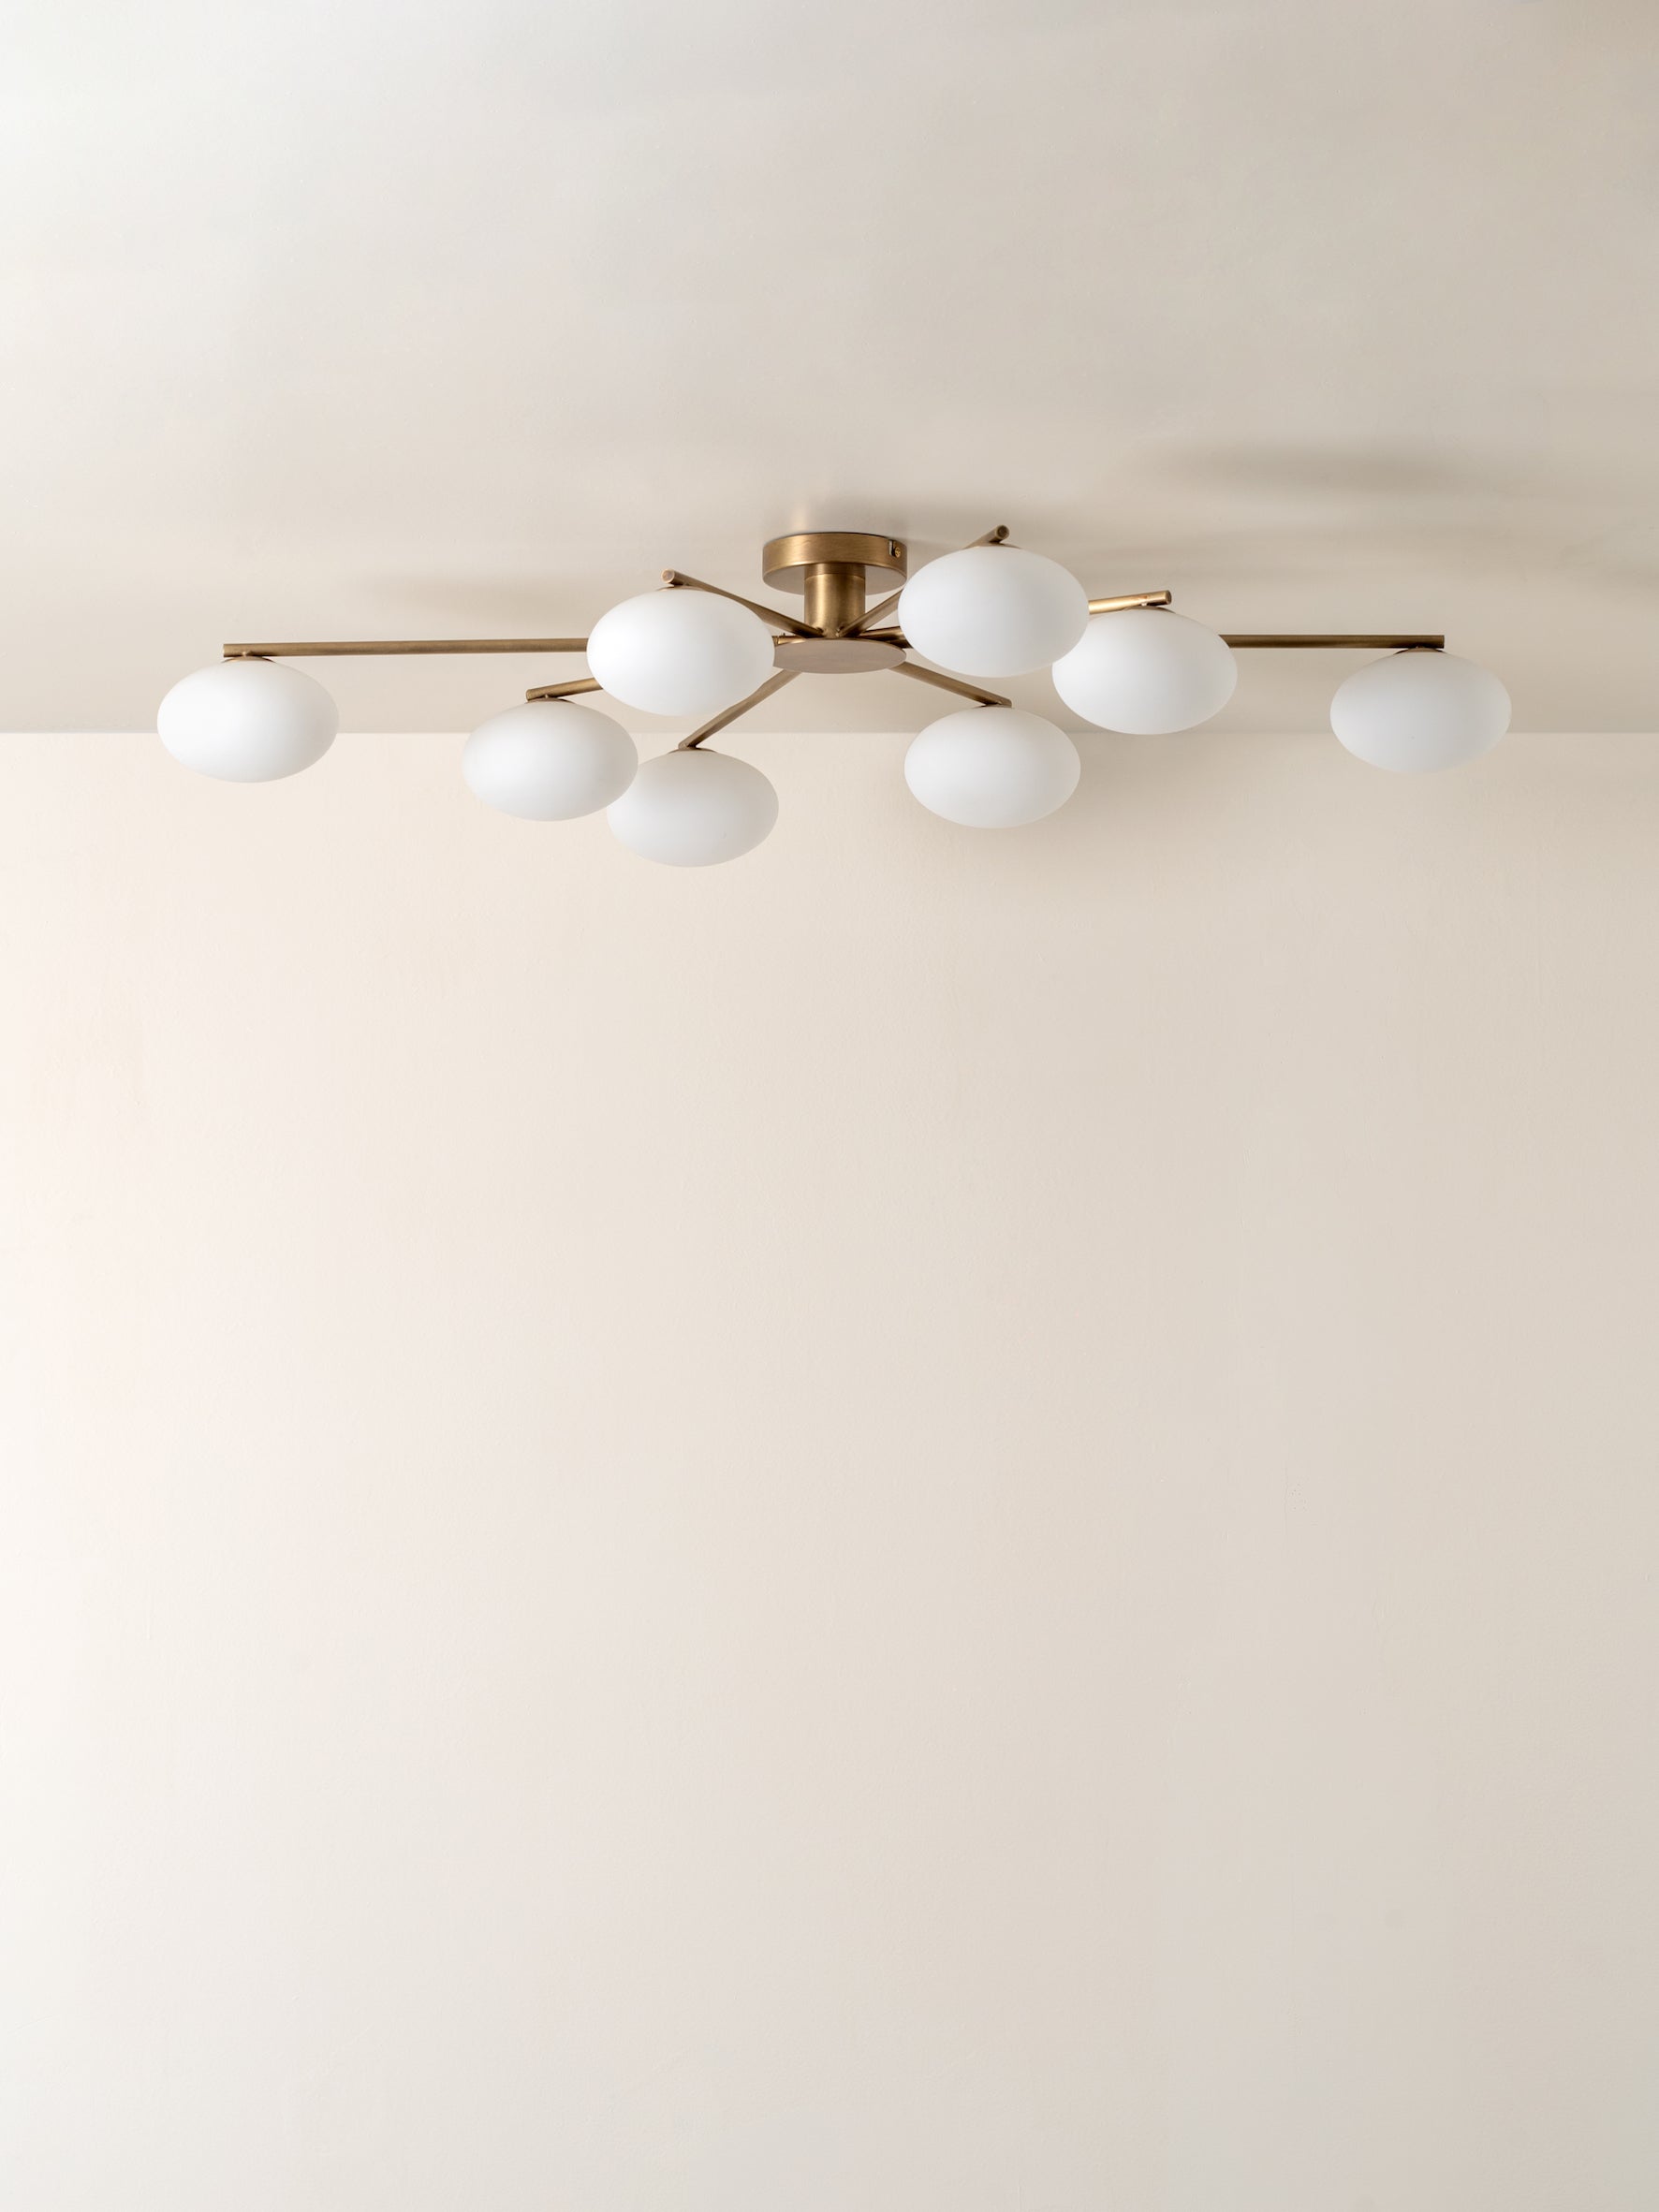 Imperial - 8 light aged brass and opal flush pendant | Ceiling Light | Lights & Lamps Inc | Modern Affordable Designer Lighting | USA